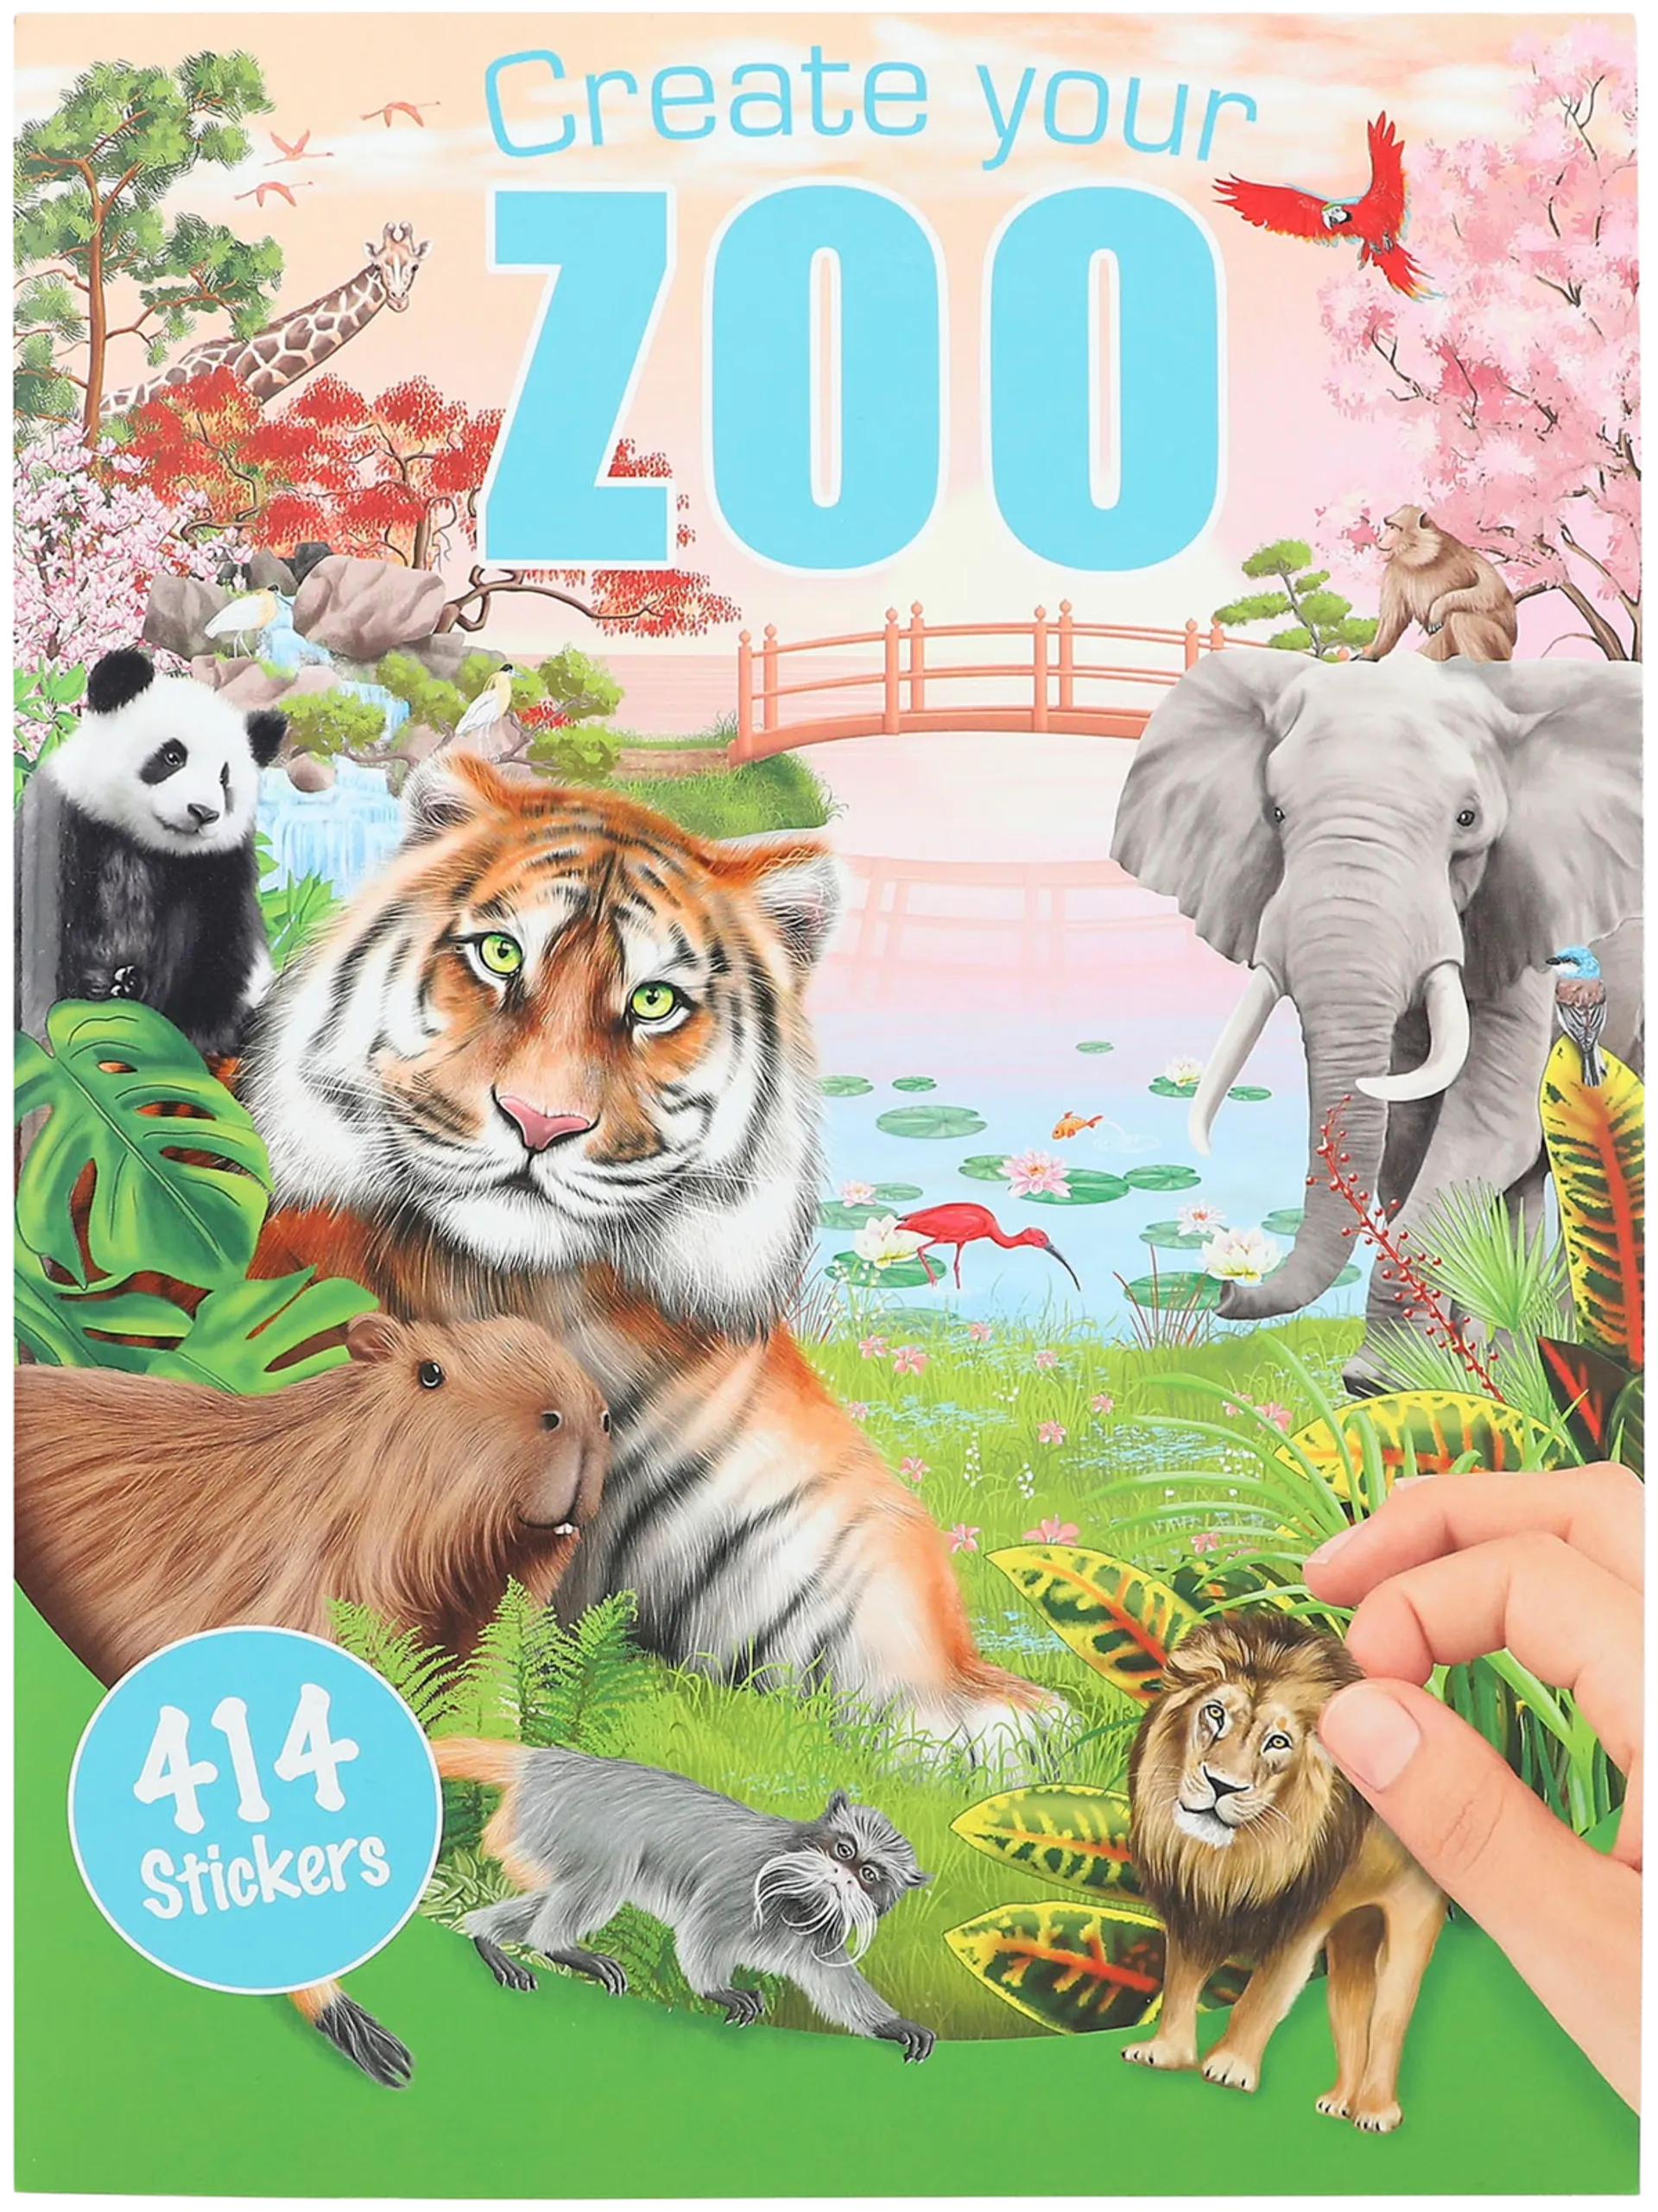 Creative Studio tarrakirja Create your Zoo - 1